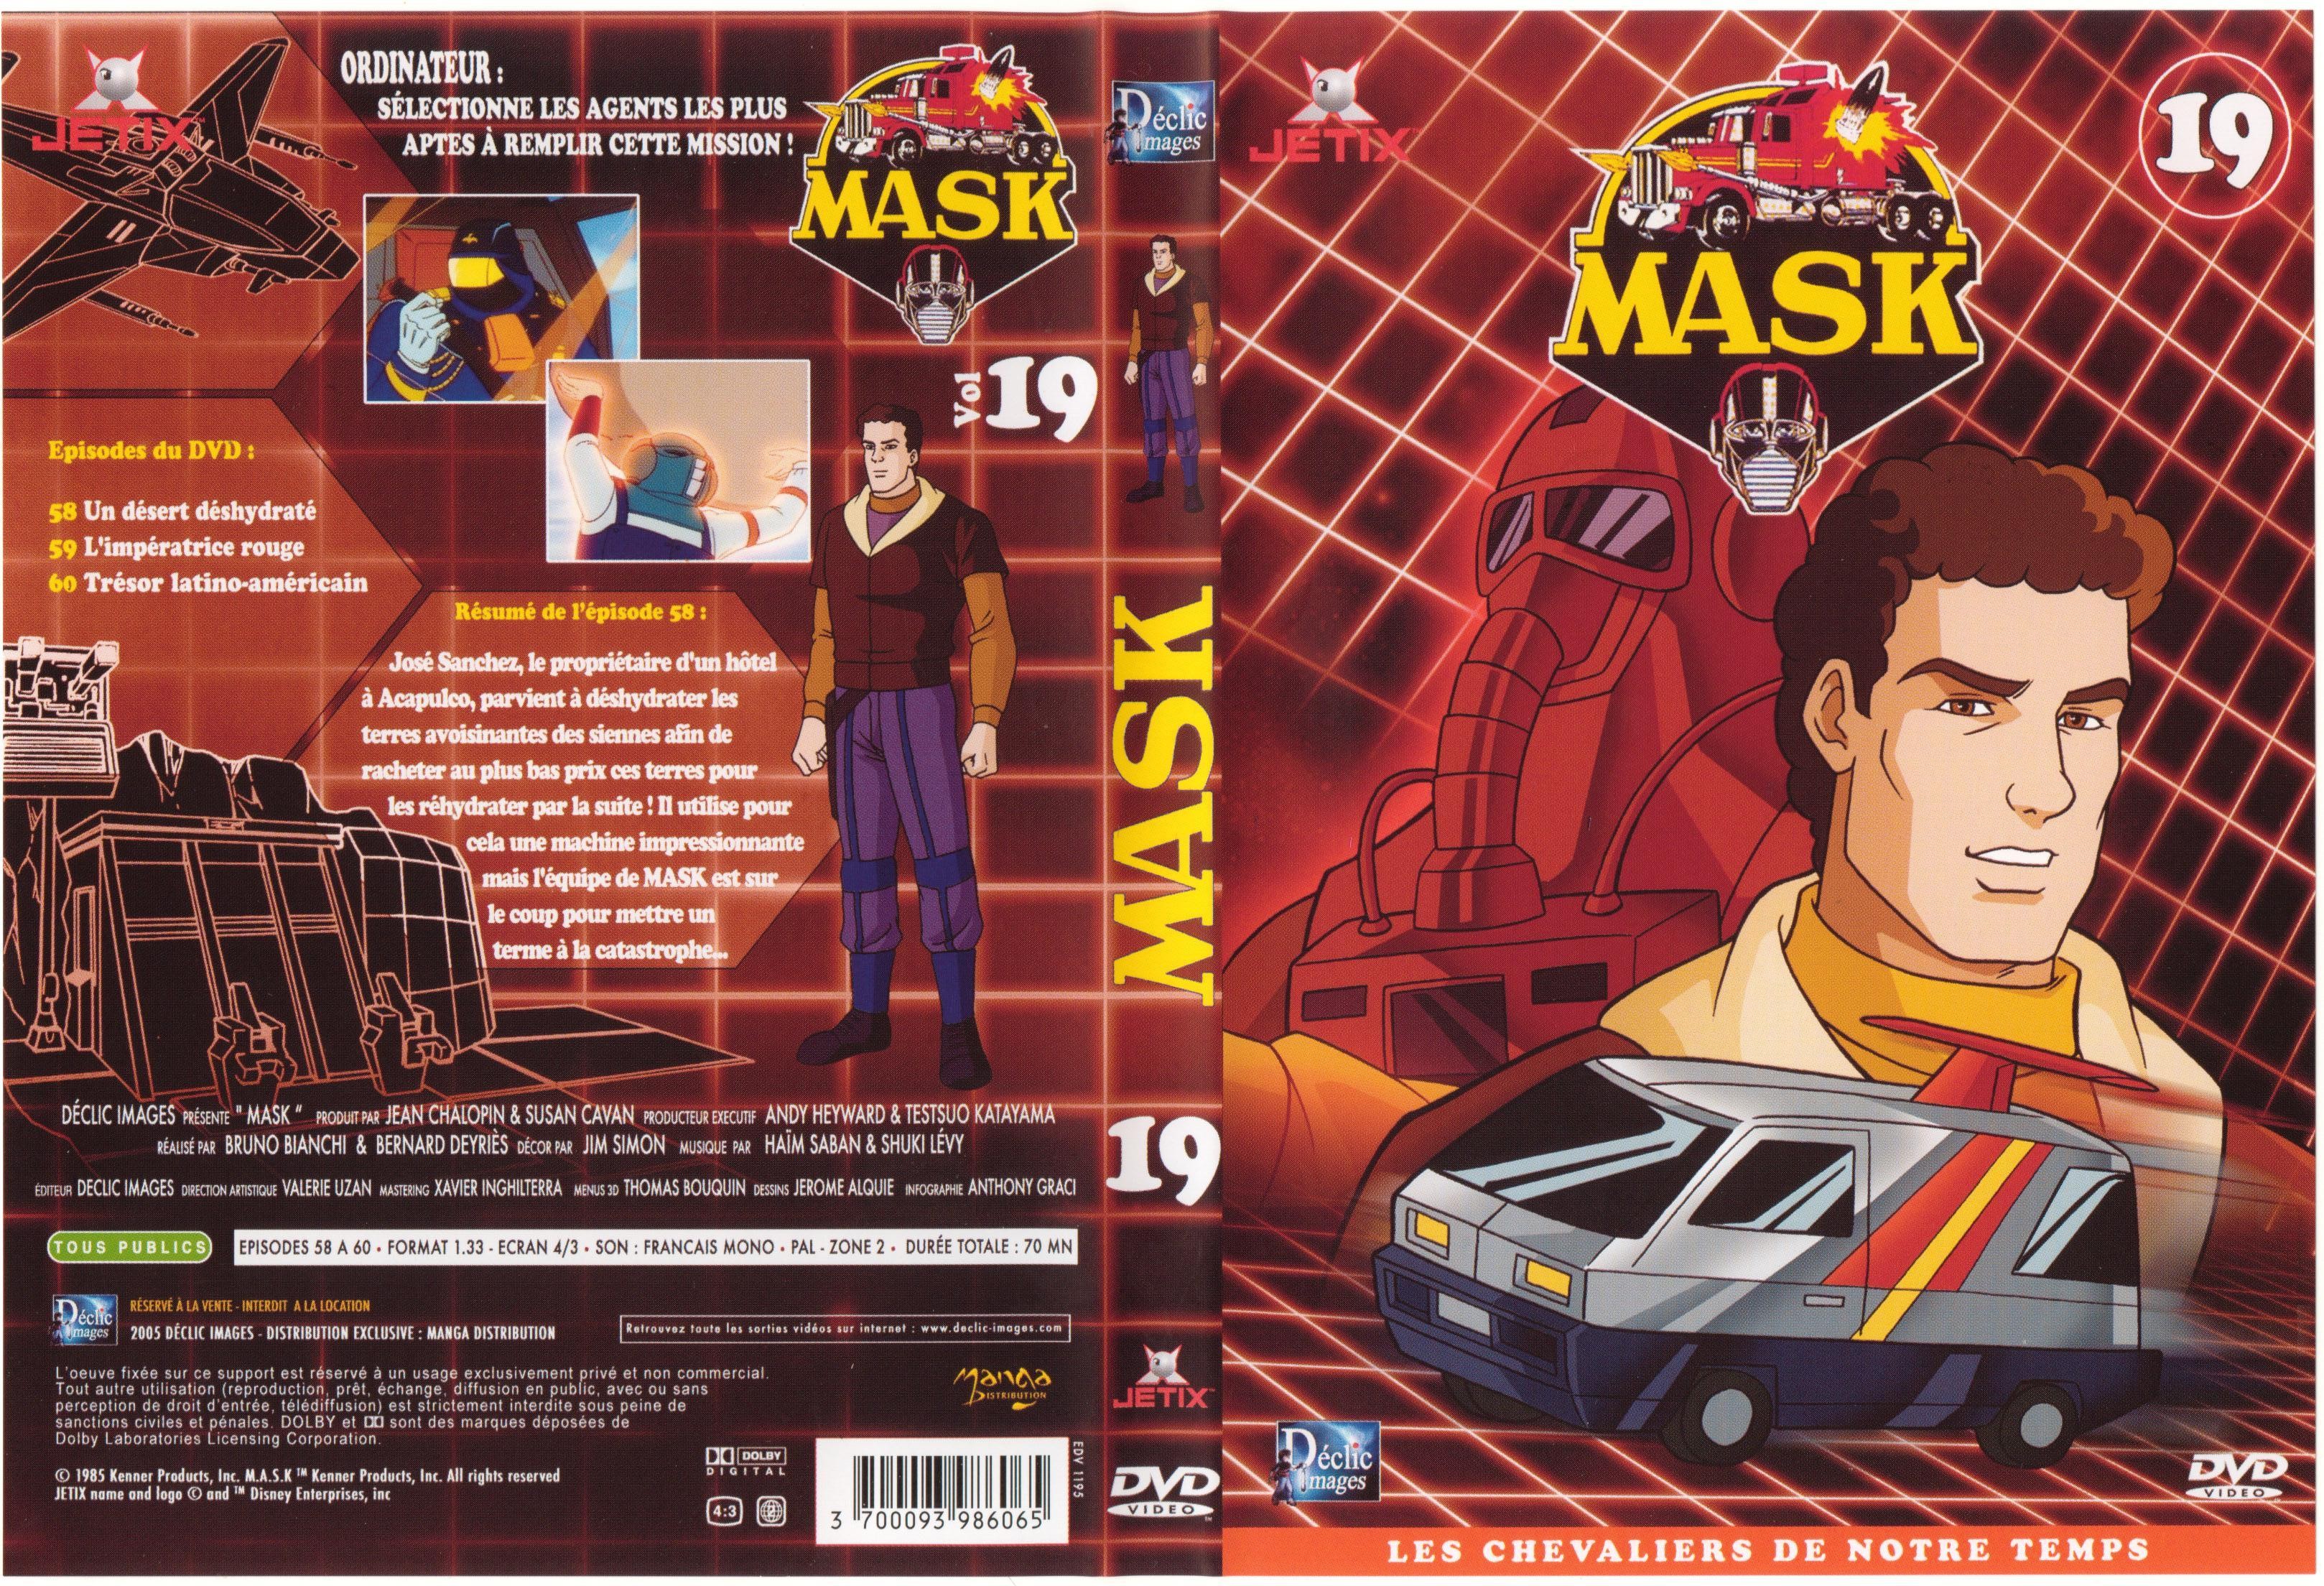 Jaquette DVD Mask vol 19